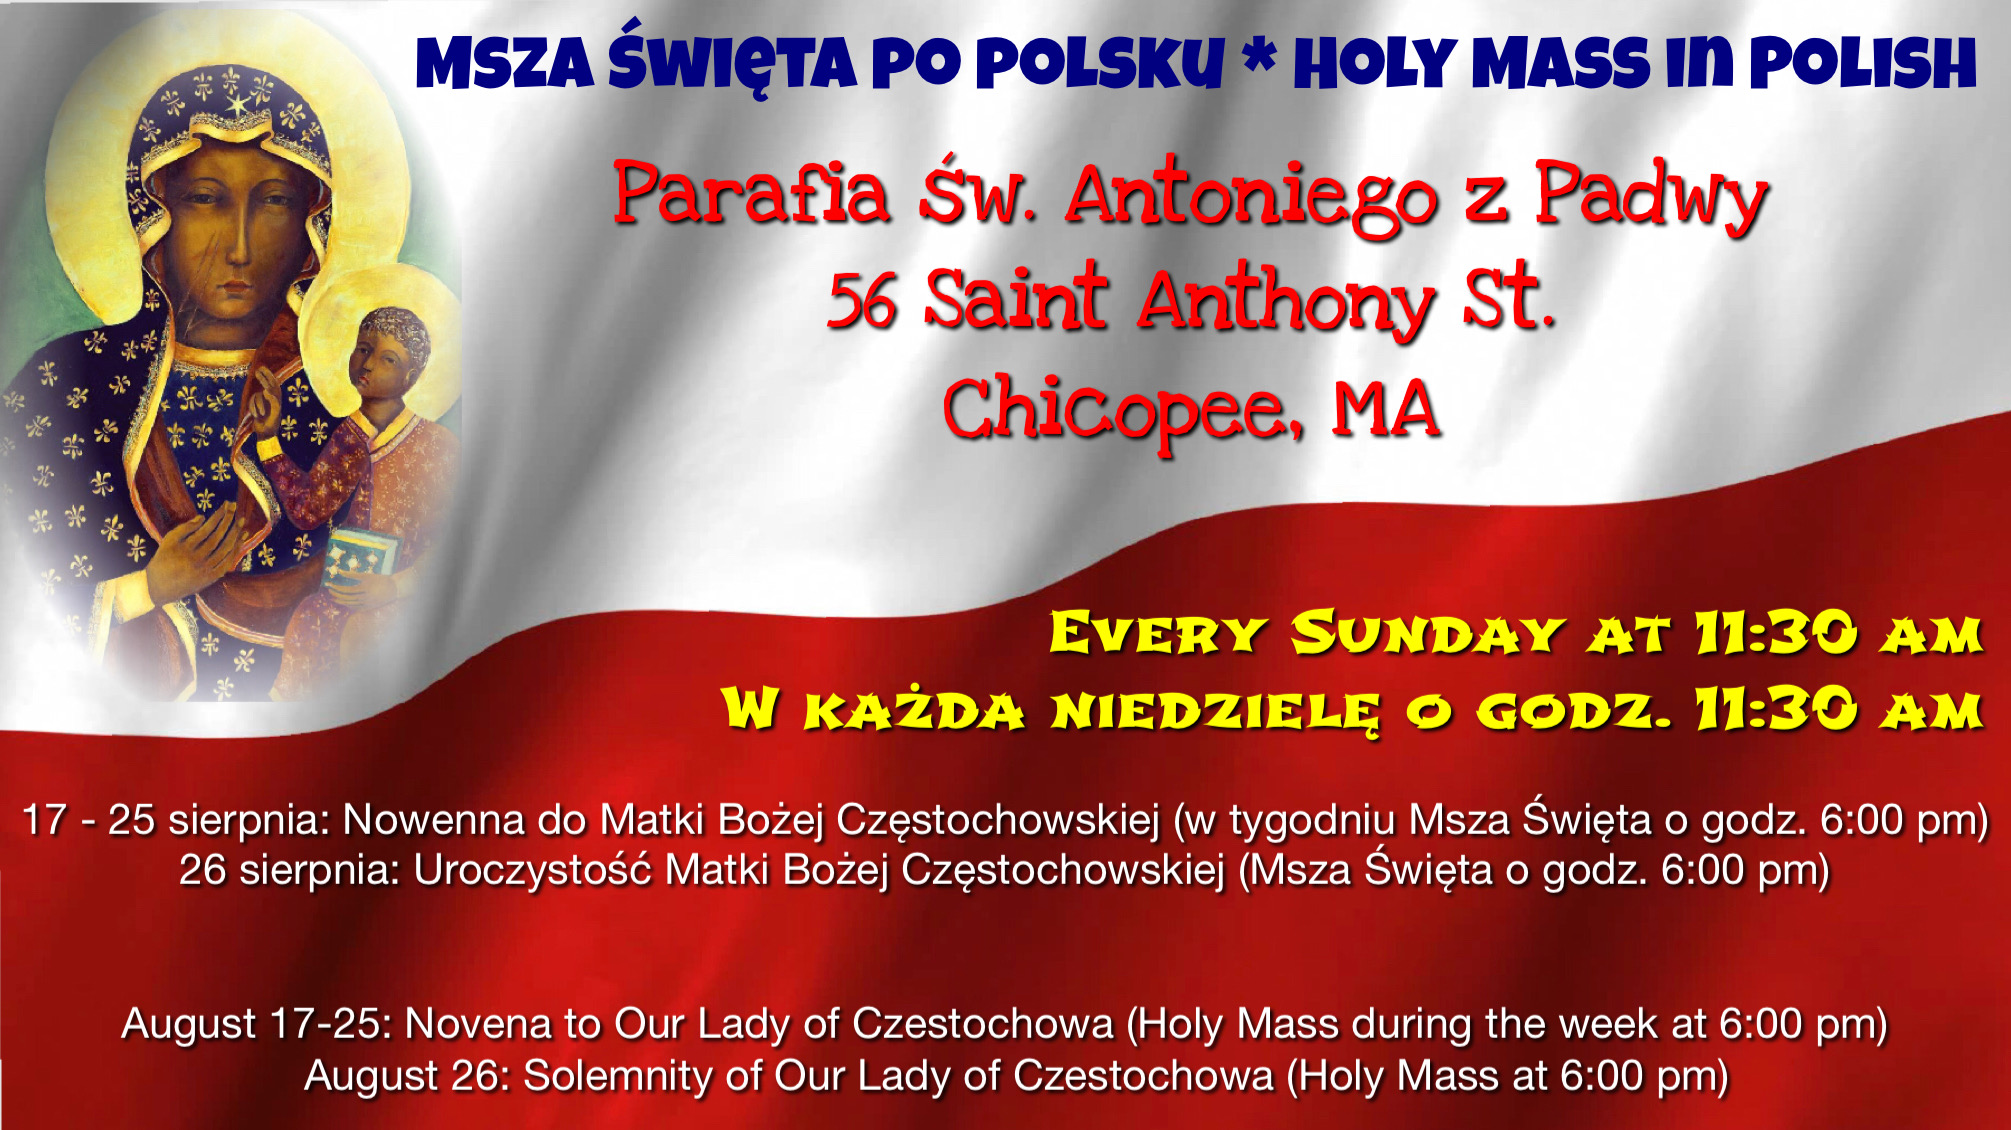 Holy Mass in Polish * Msza Święta po polsku post thumbnail image